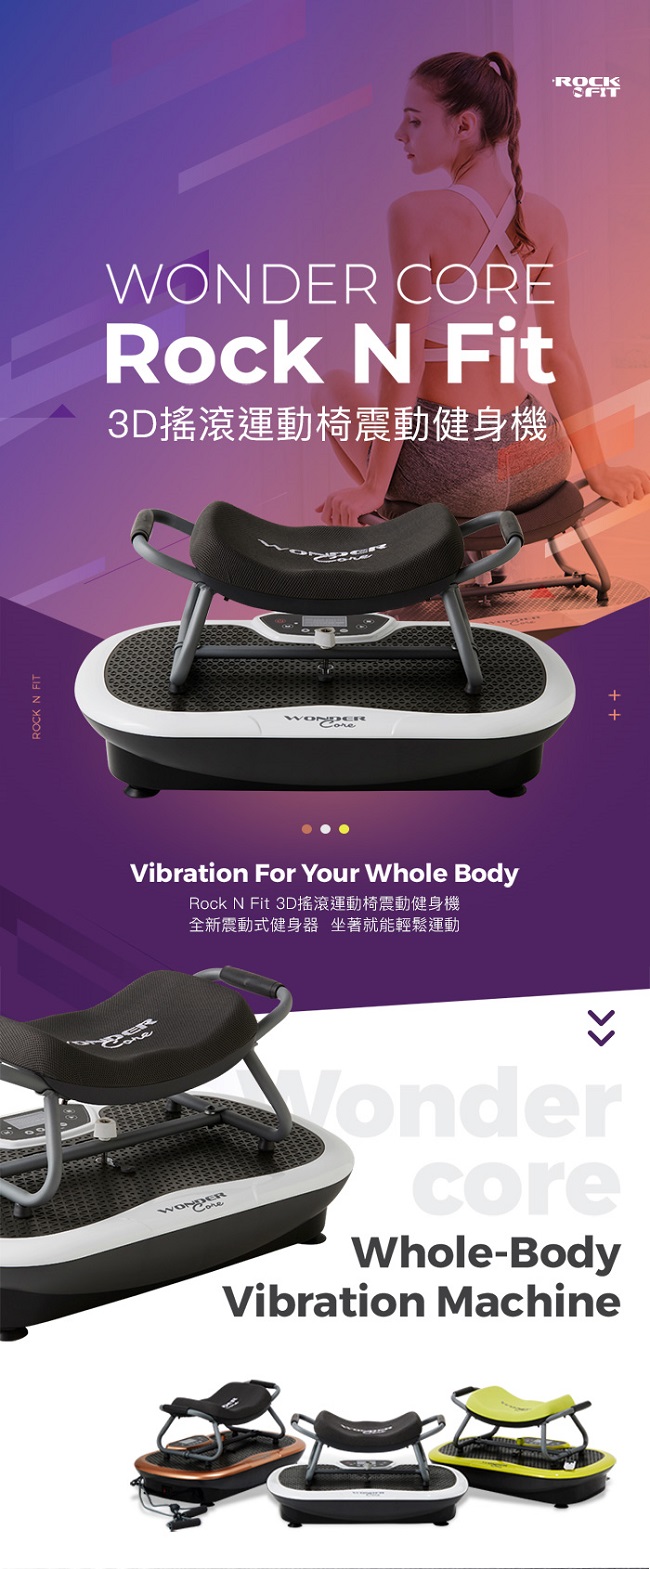 Wonder Core Rock N Fit 3D搖滾運動椅 震動健身機(萊姆綠)